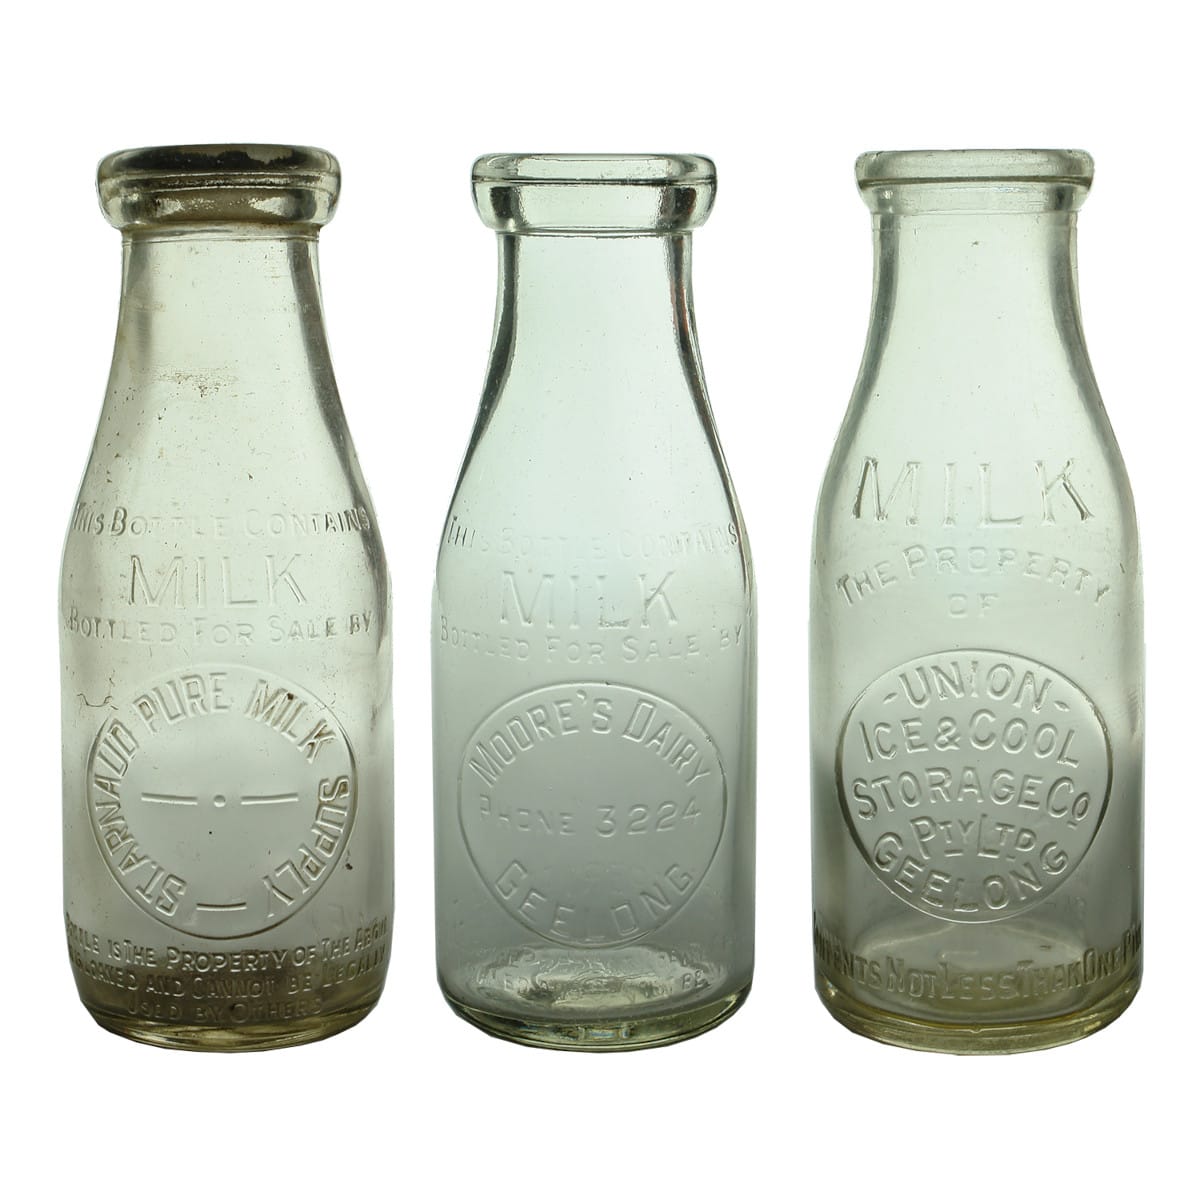 Three Pint Milks: St Arnaud; Moore's Dairy, Geelong and Union Ice & Cool Storage. (Victoria)